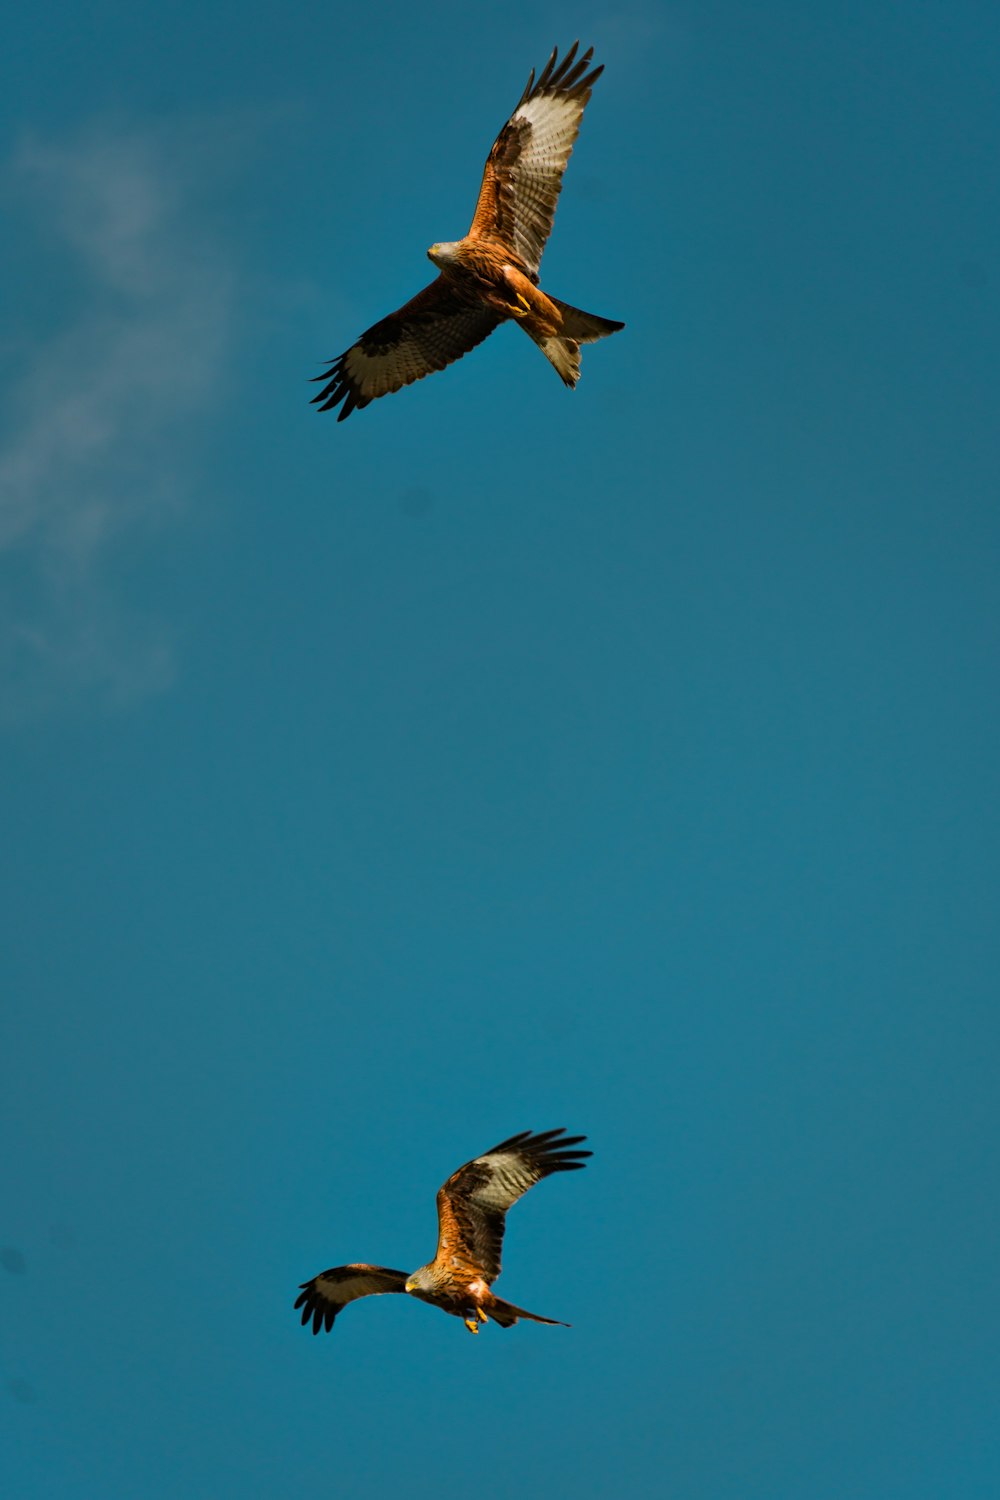 brown bird flying under blue sky during daytime